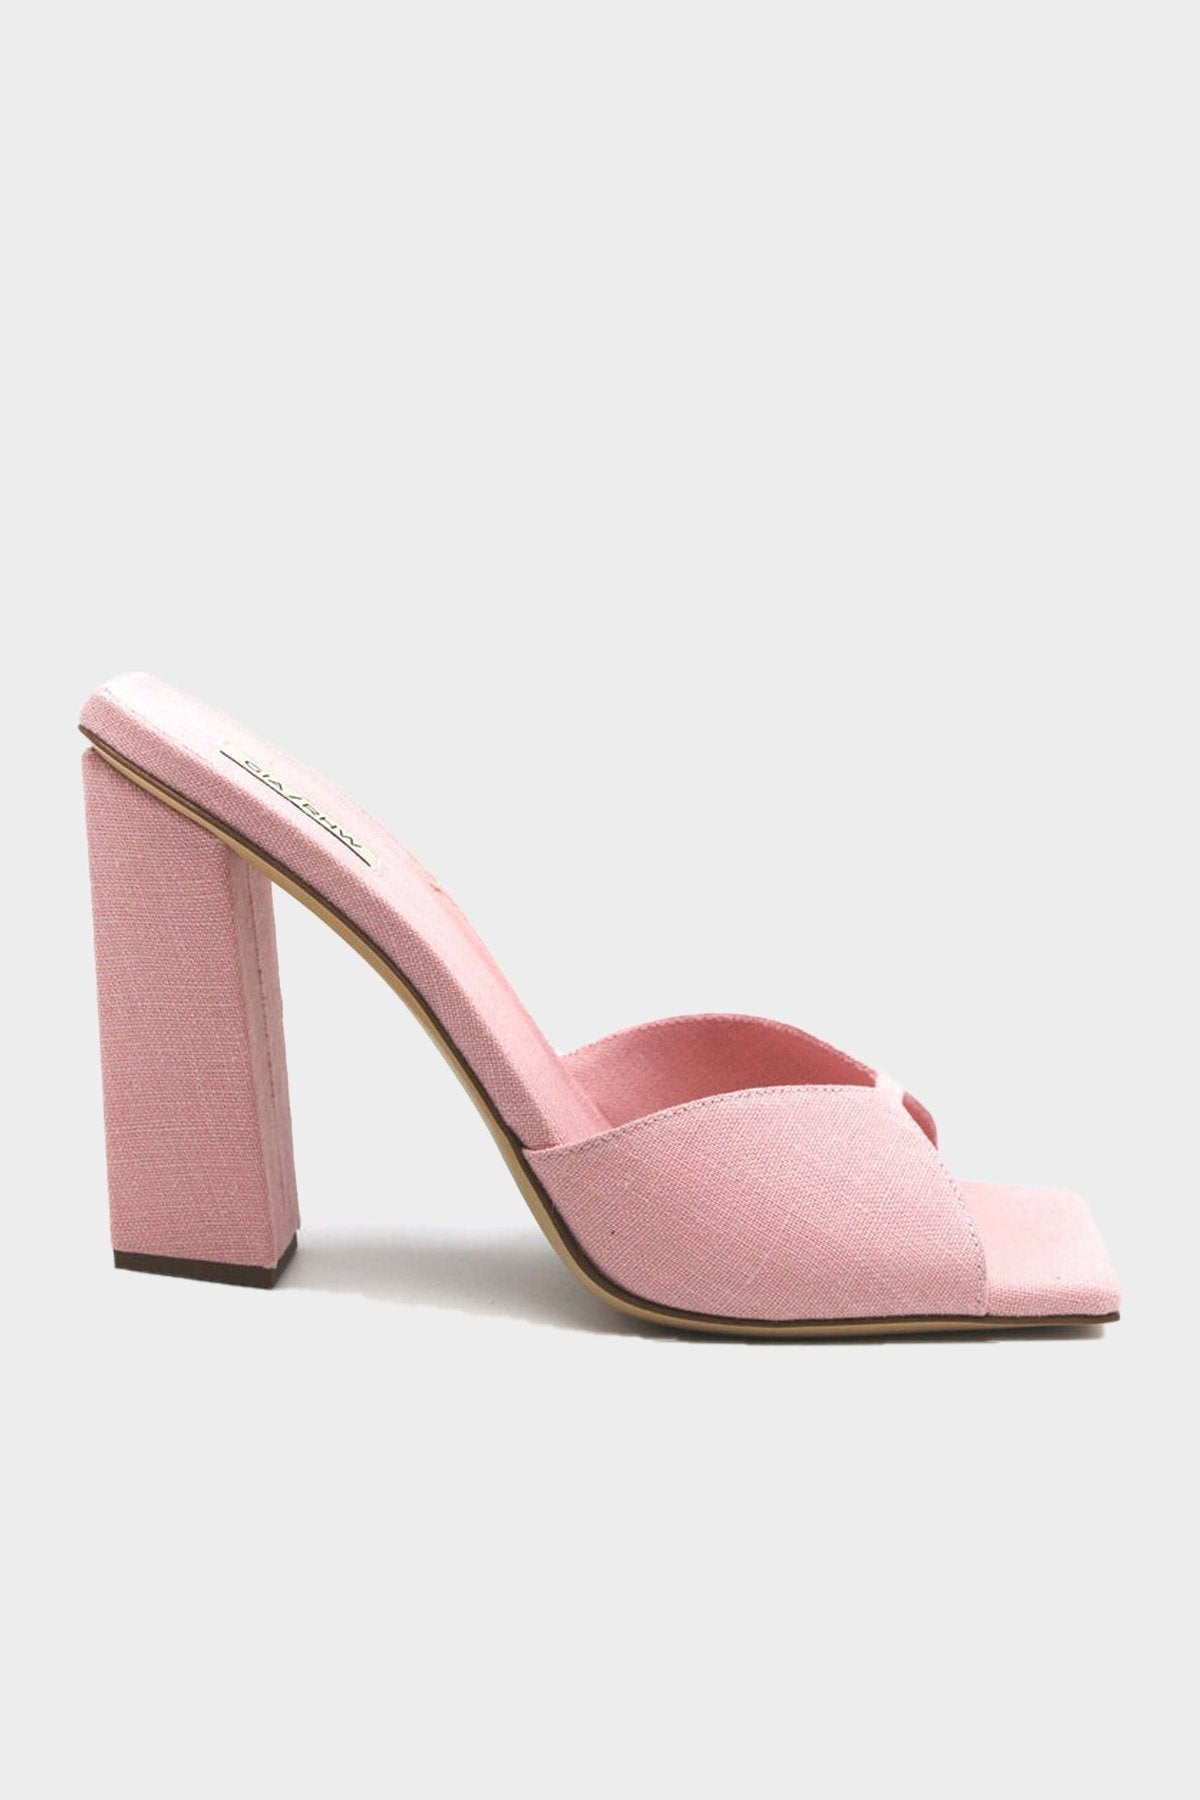 Rosie Square Toe Sandals in Pink - shop-olivia.com